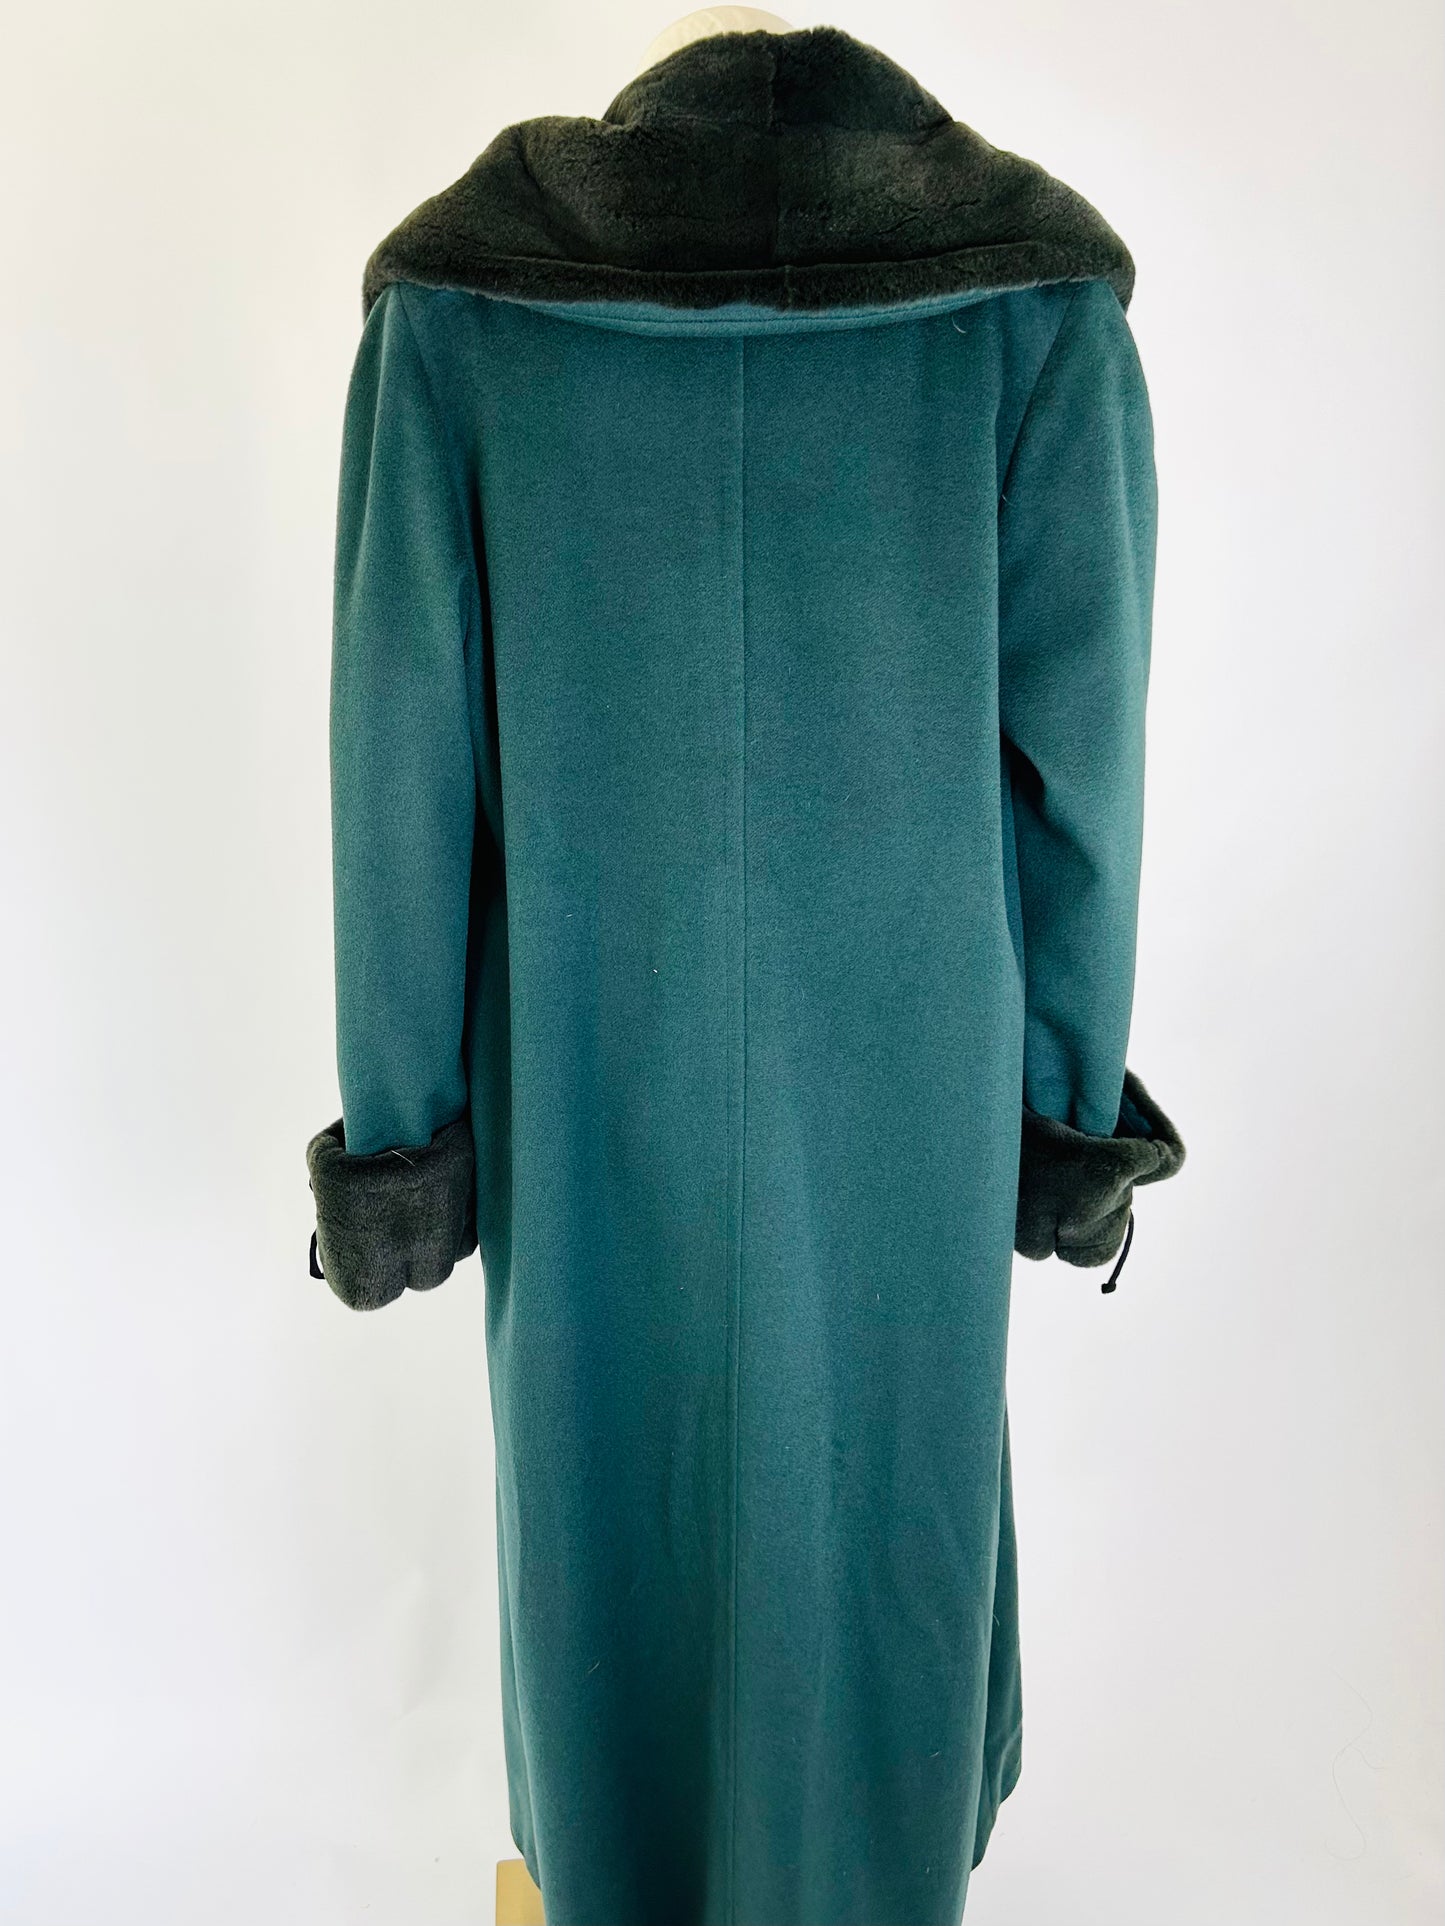 Vintage Neiman Marcus Forest Green Coat